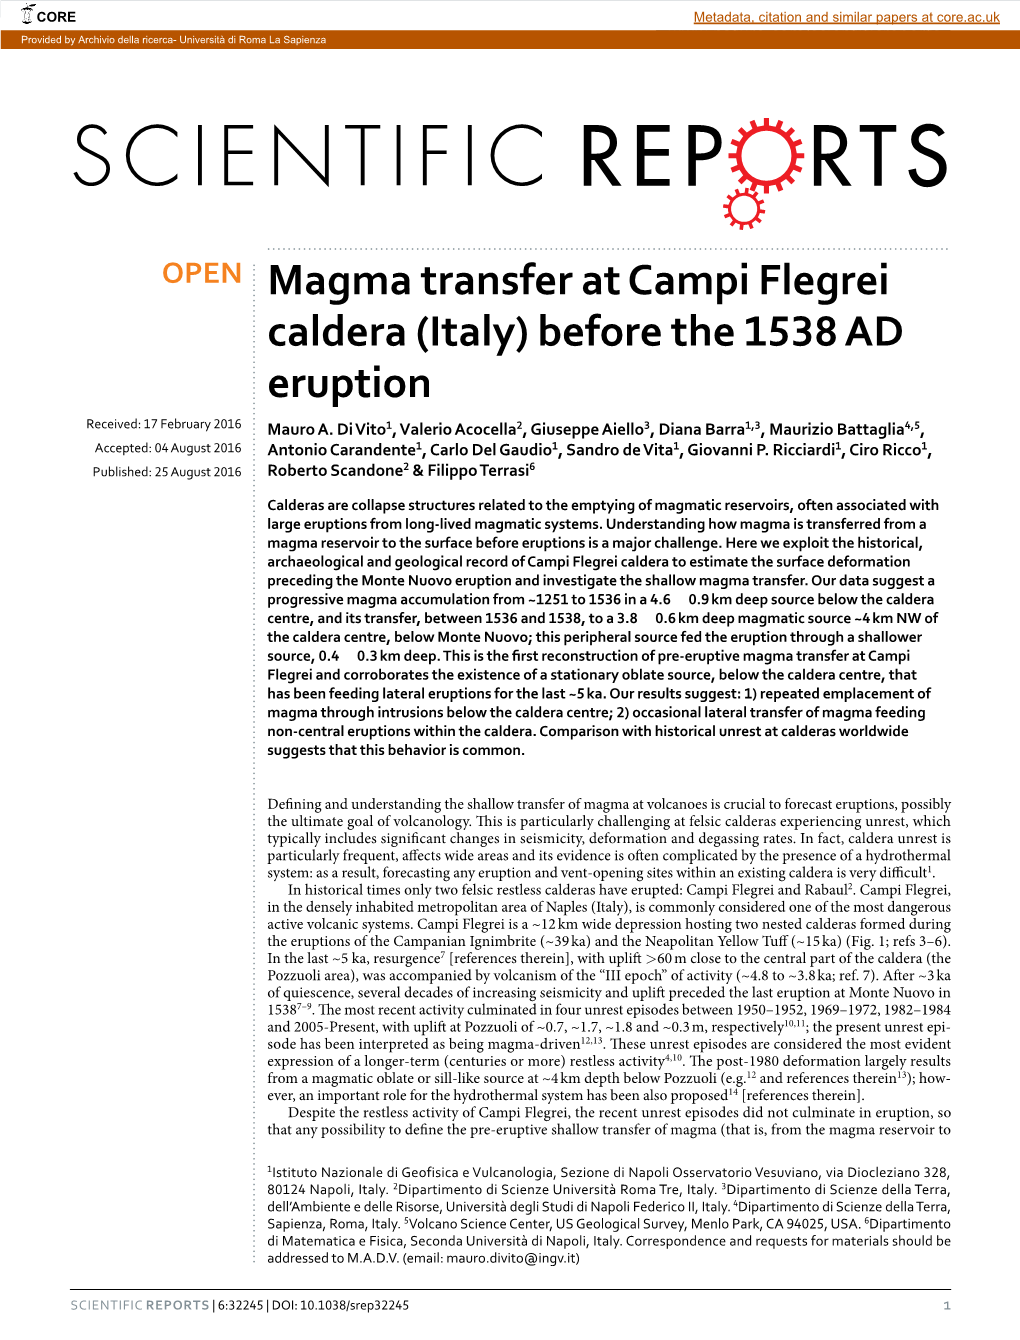 Magma Transfer at Campi Flegrei Caldera (Italy) Before the 1538 AD Eruption Received: 17 February 2016 Mauro A